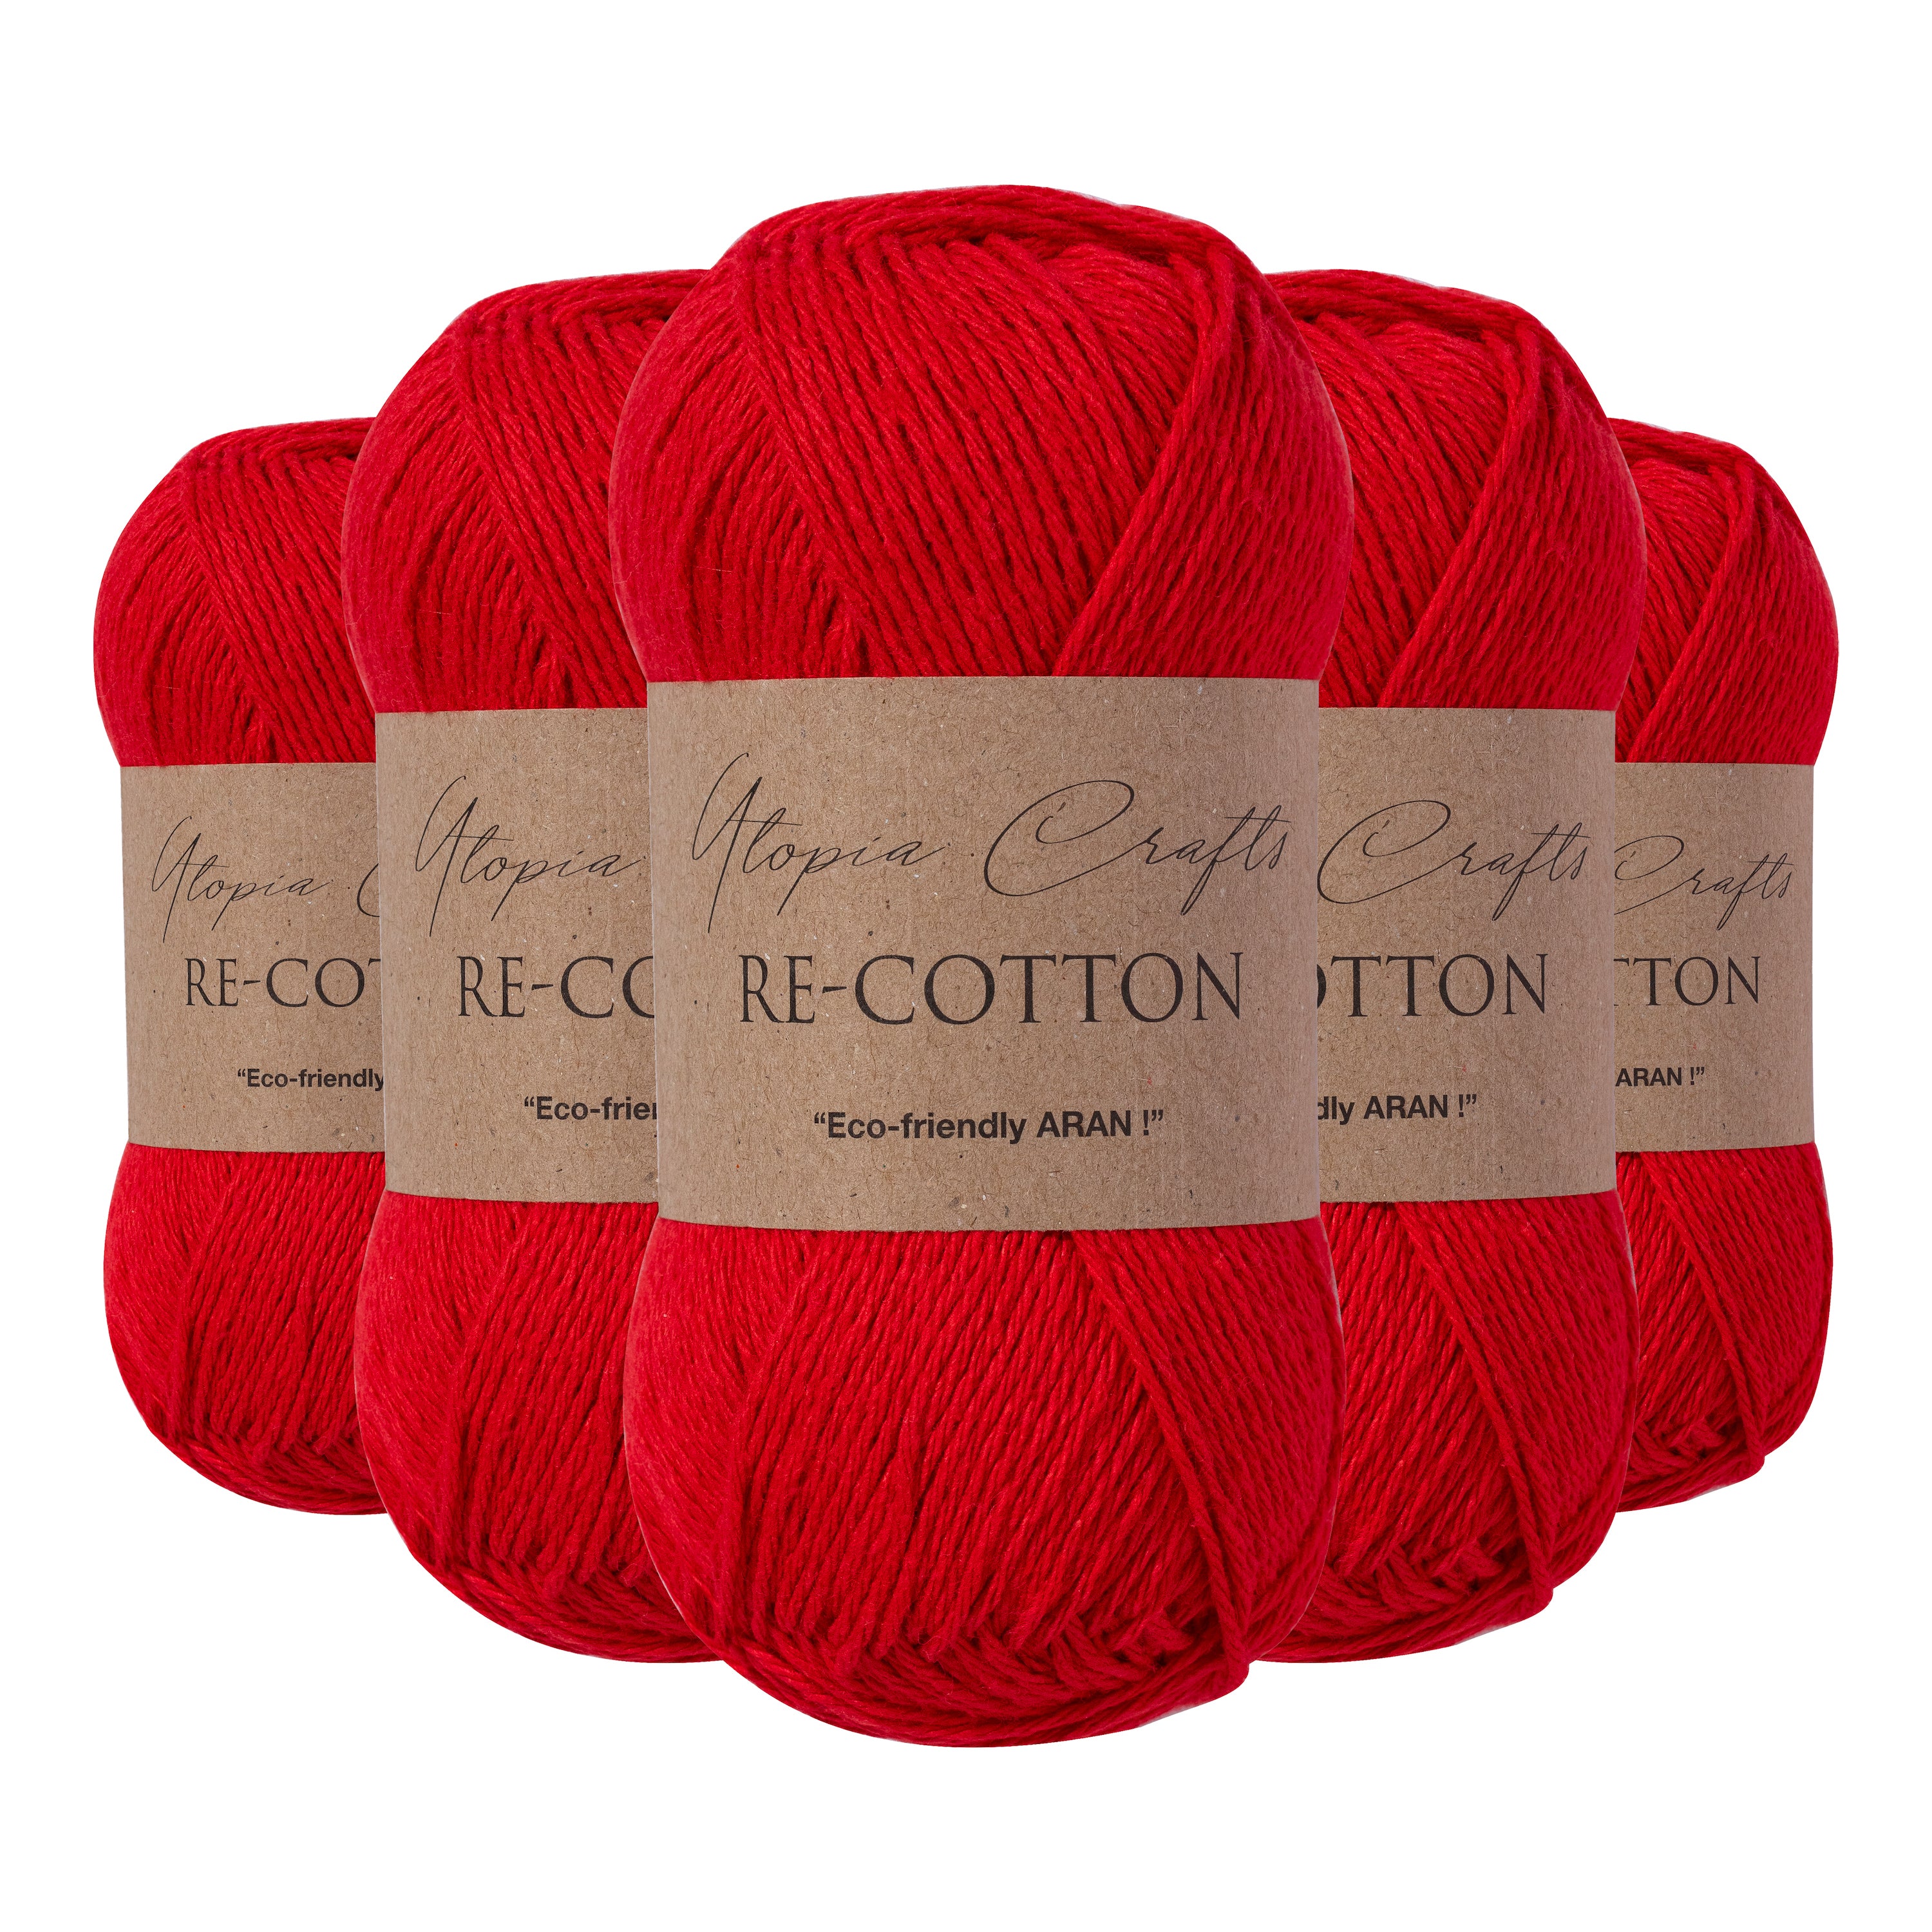 Utopia Crafts Re-Cotton Knitting Yarn, 5x 100g [Scarlet]